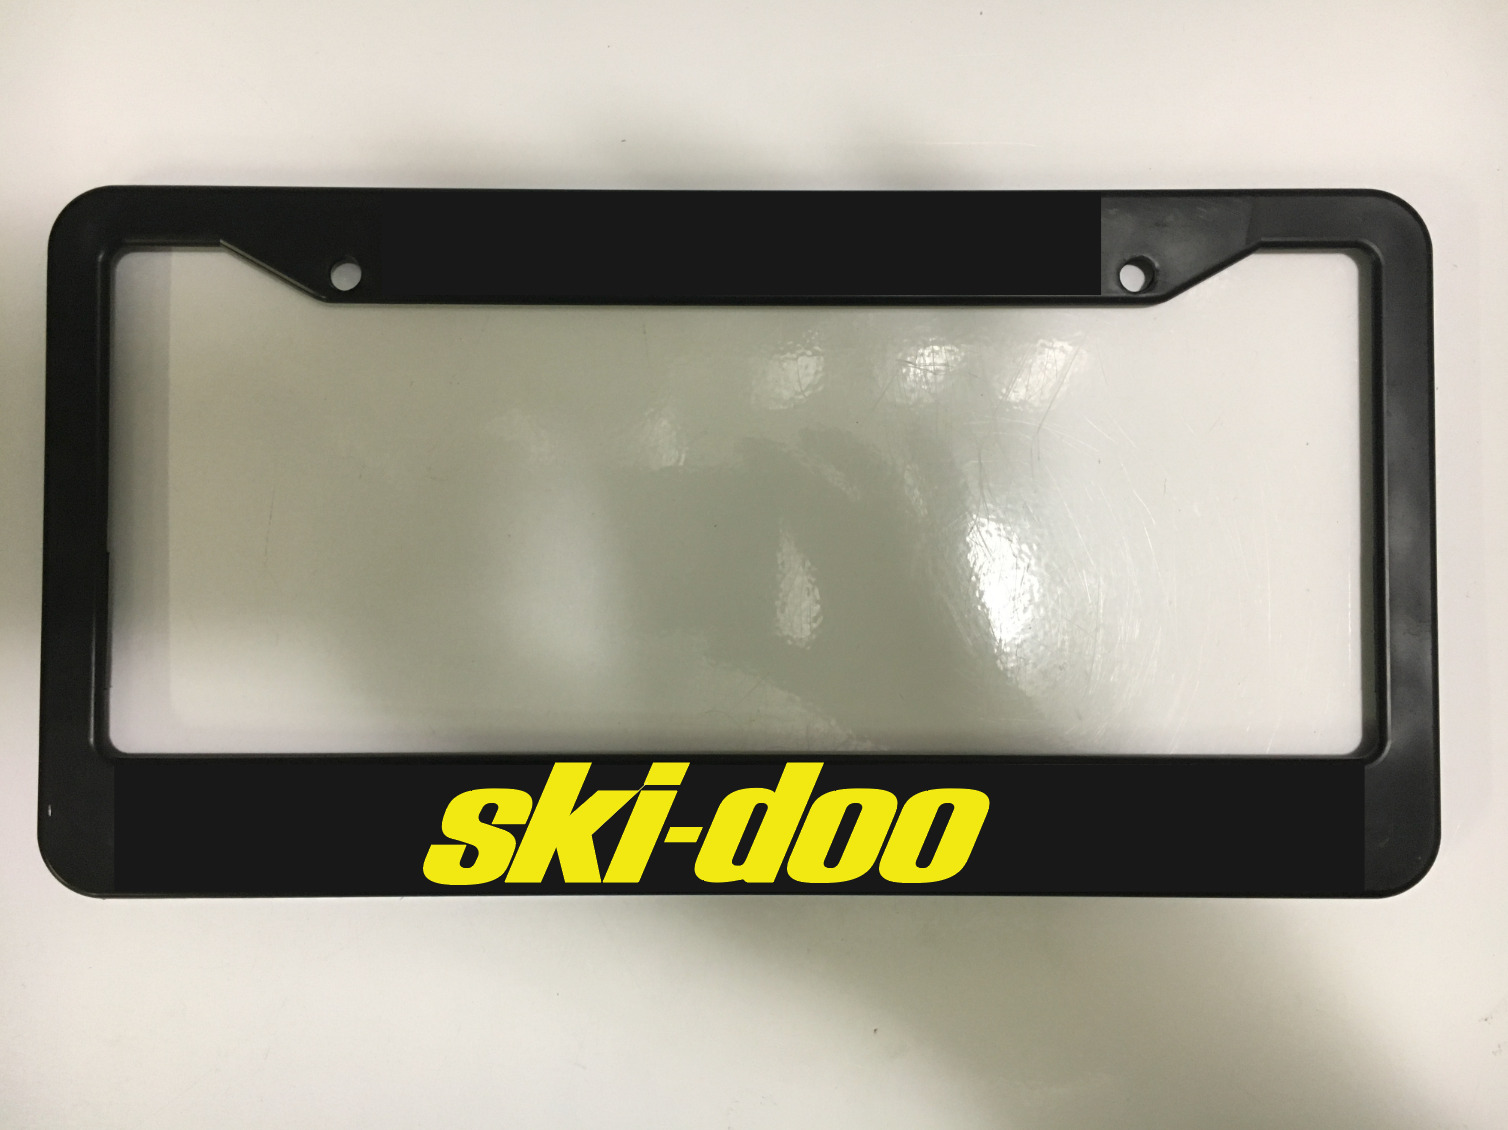 Ski Doo Ski-doo snowmobile Winter Recreation Send it Car License Plate Frame